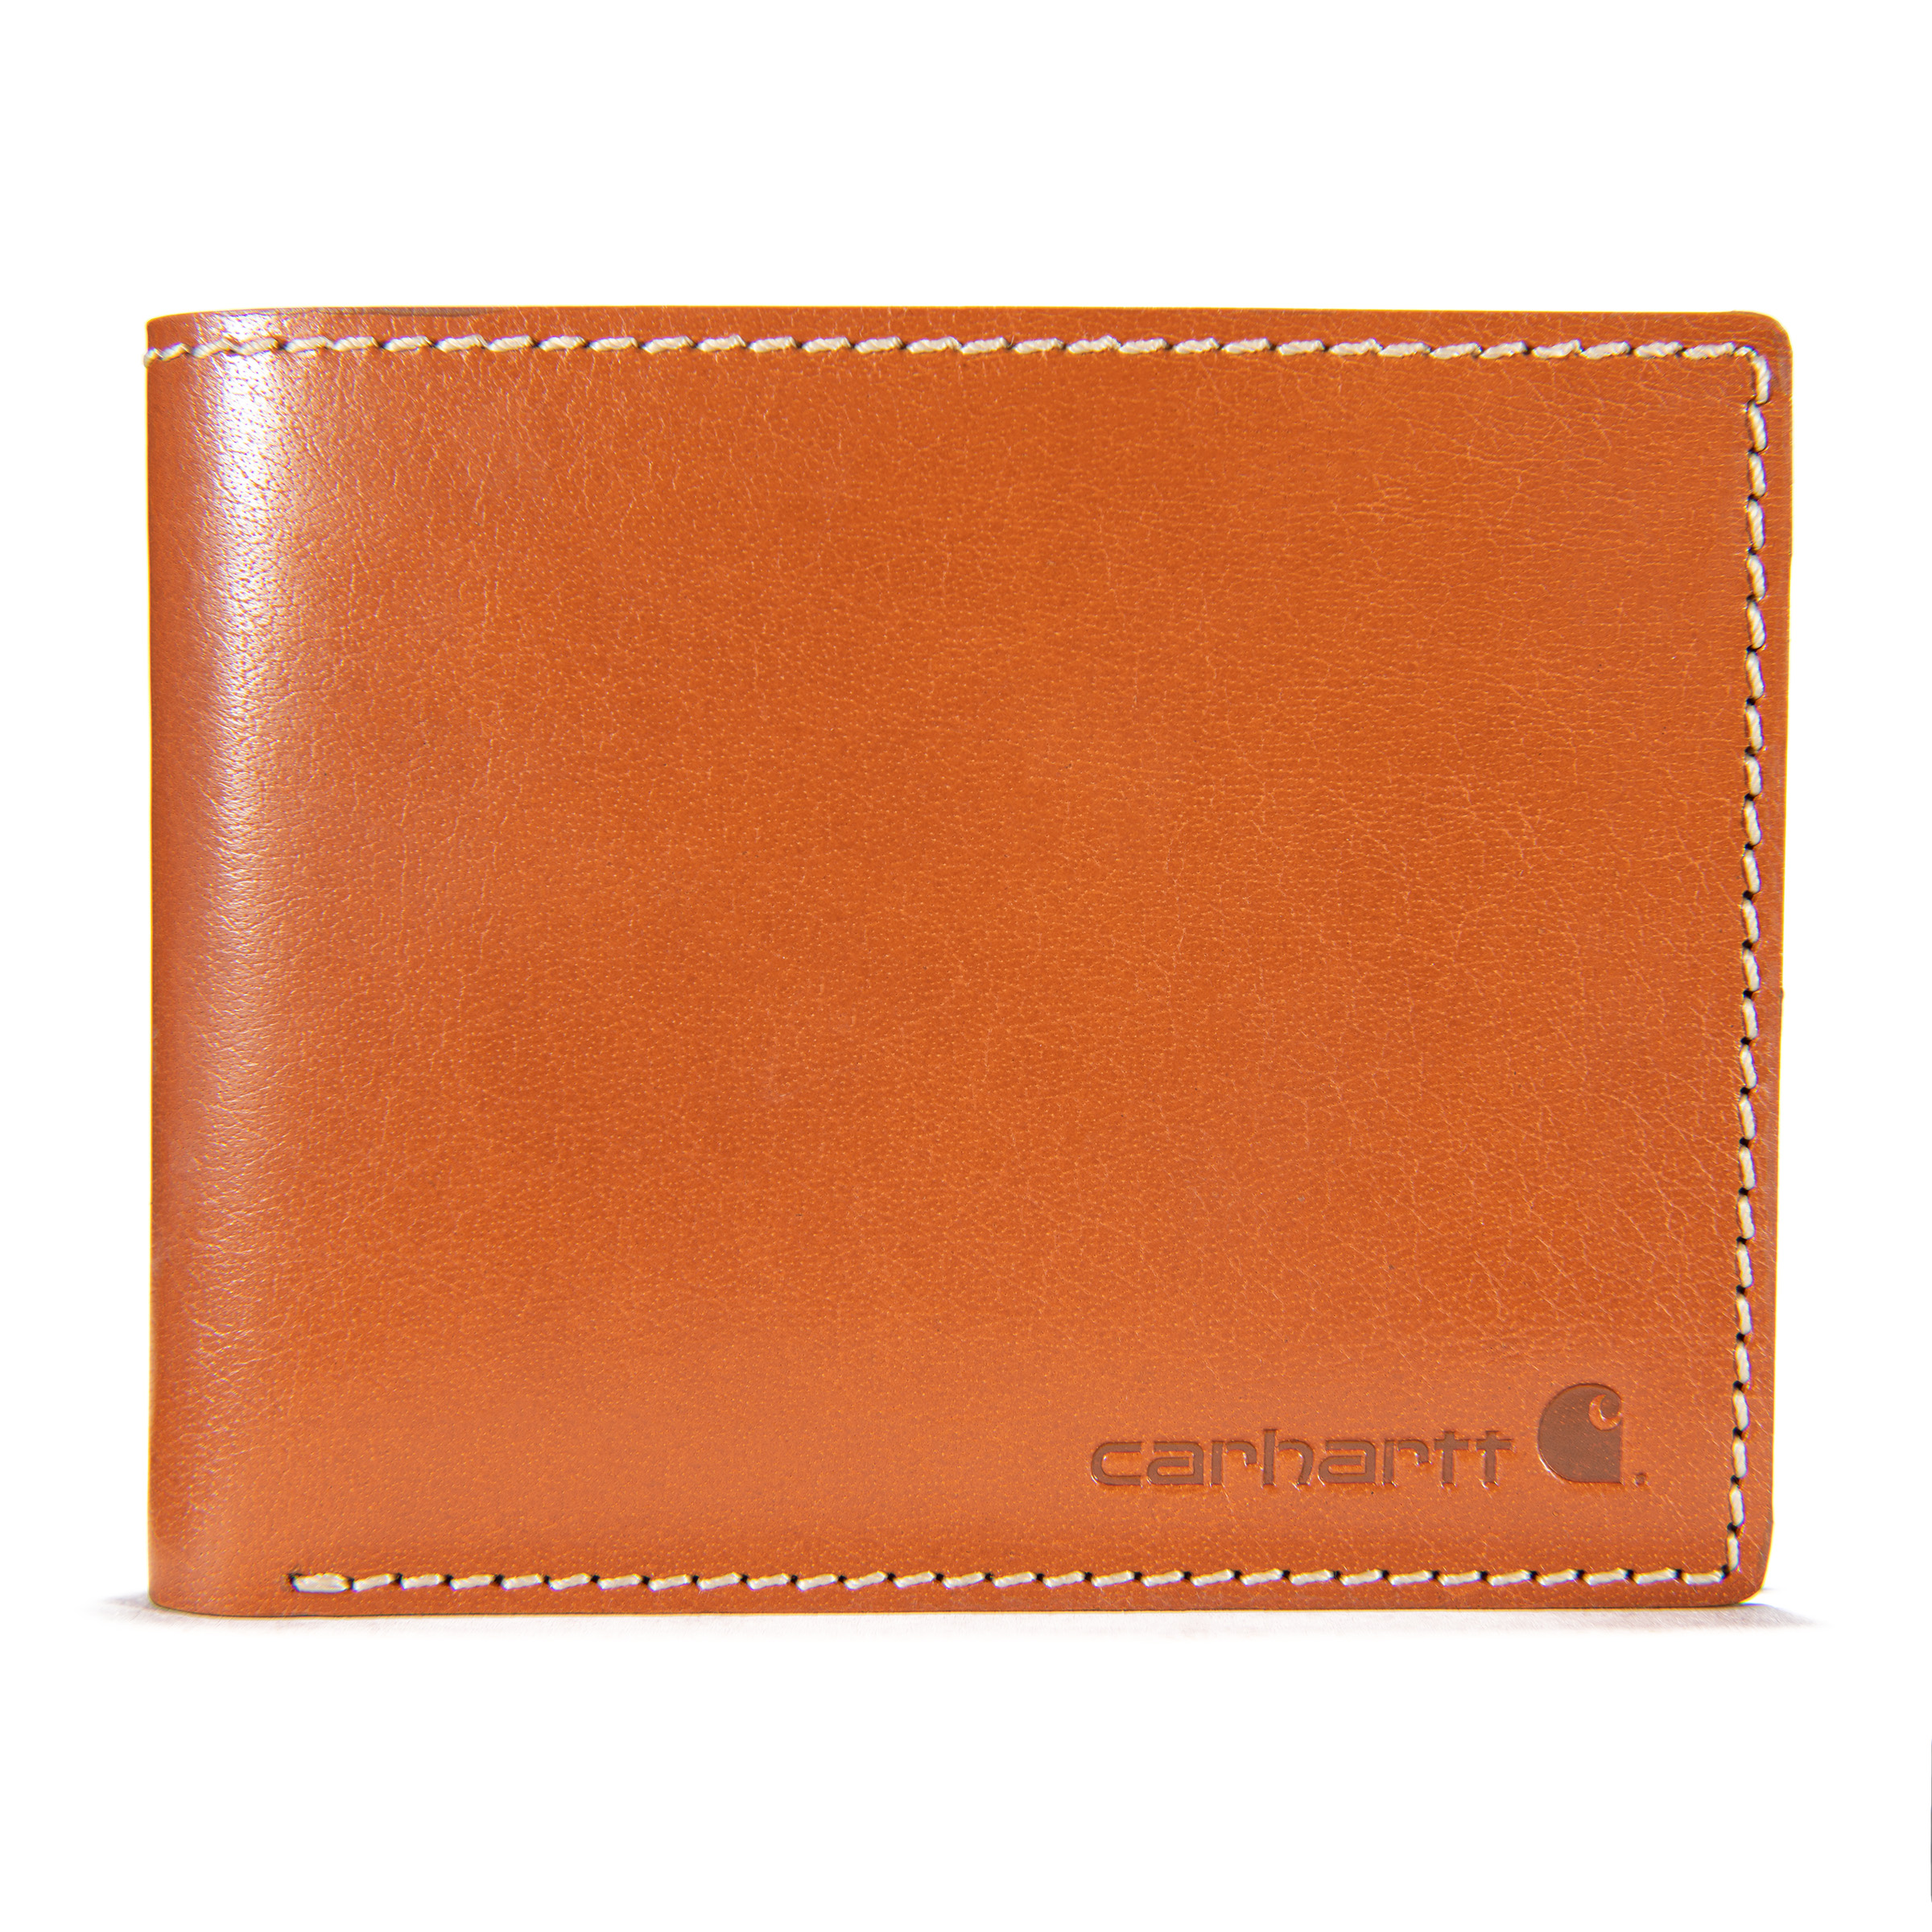 Picture of Carhartt B0000204 Mens Rough Cut Bifold Wallet